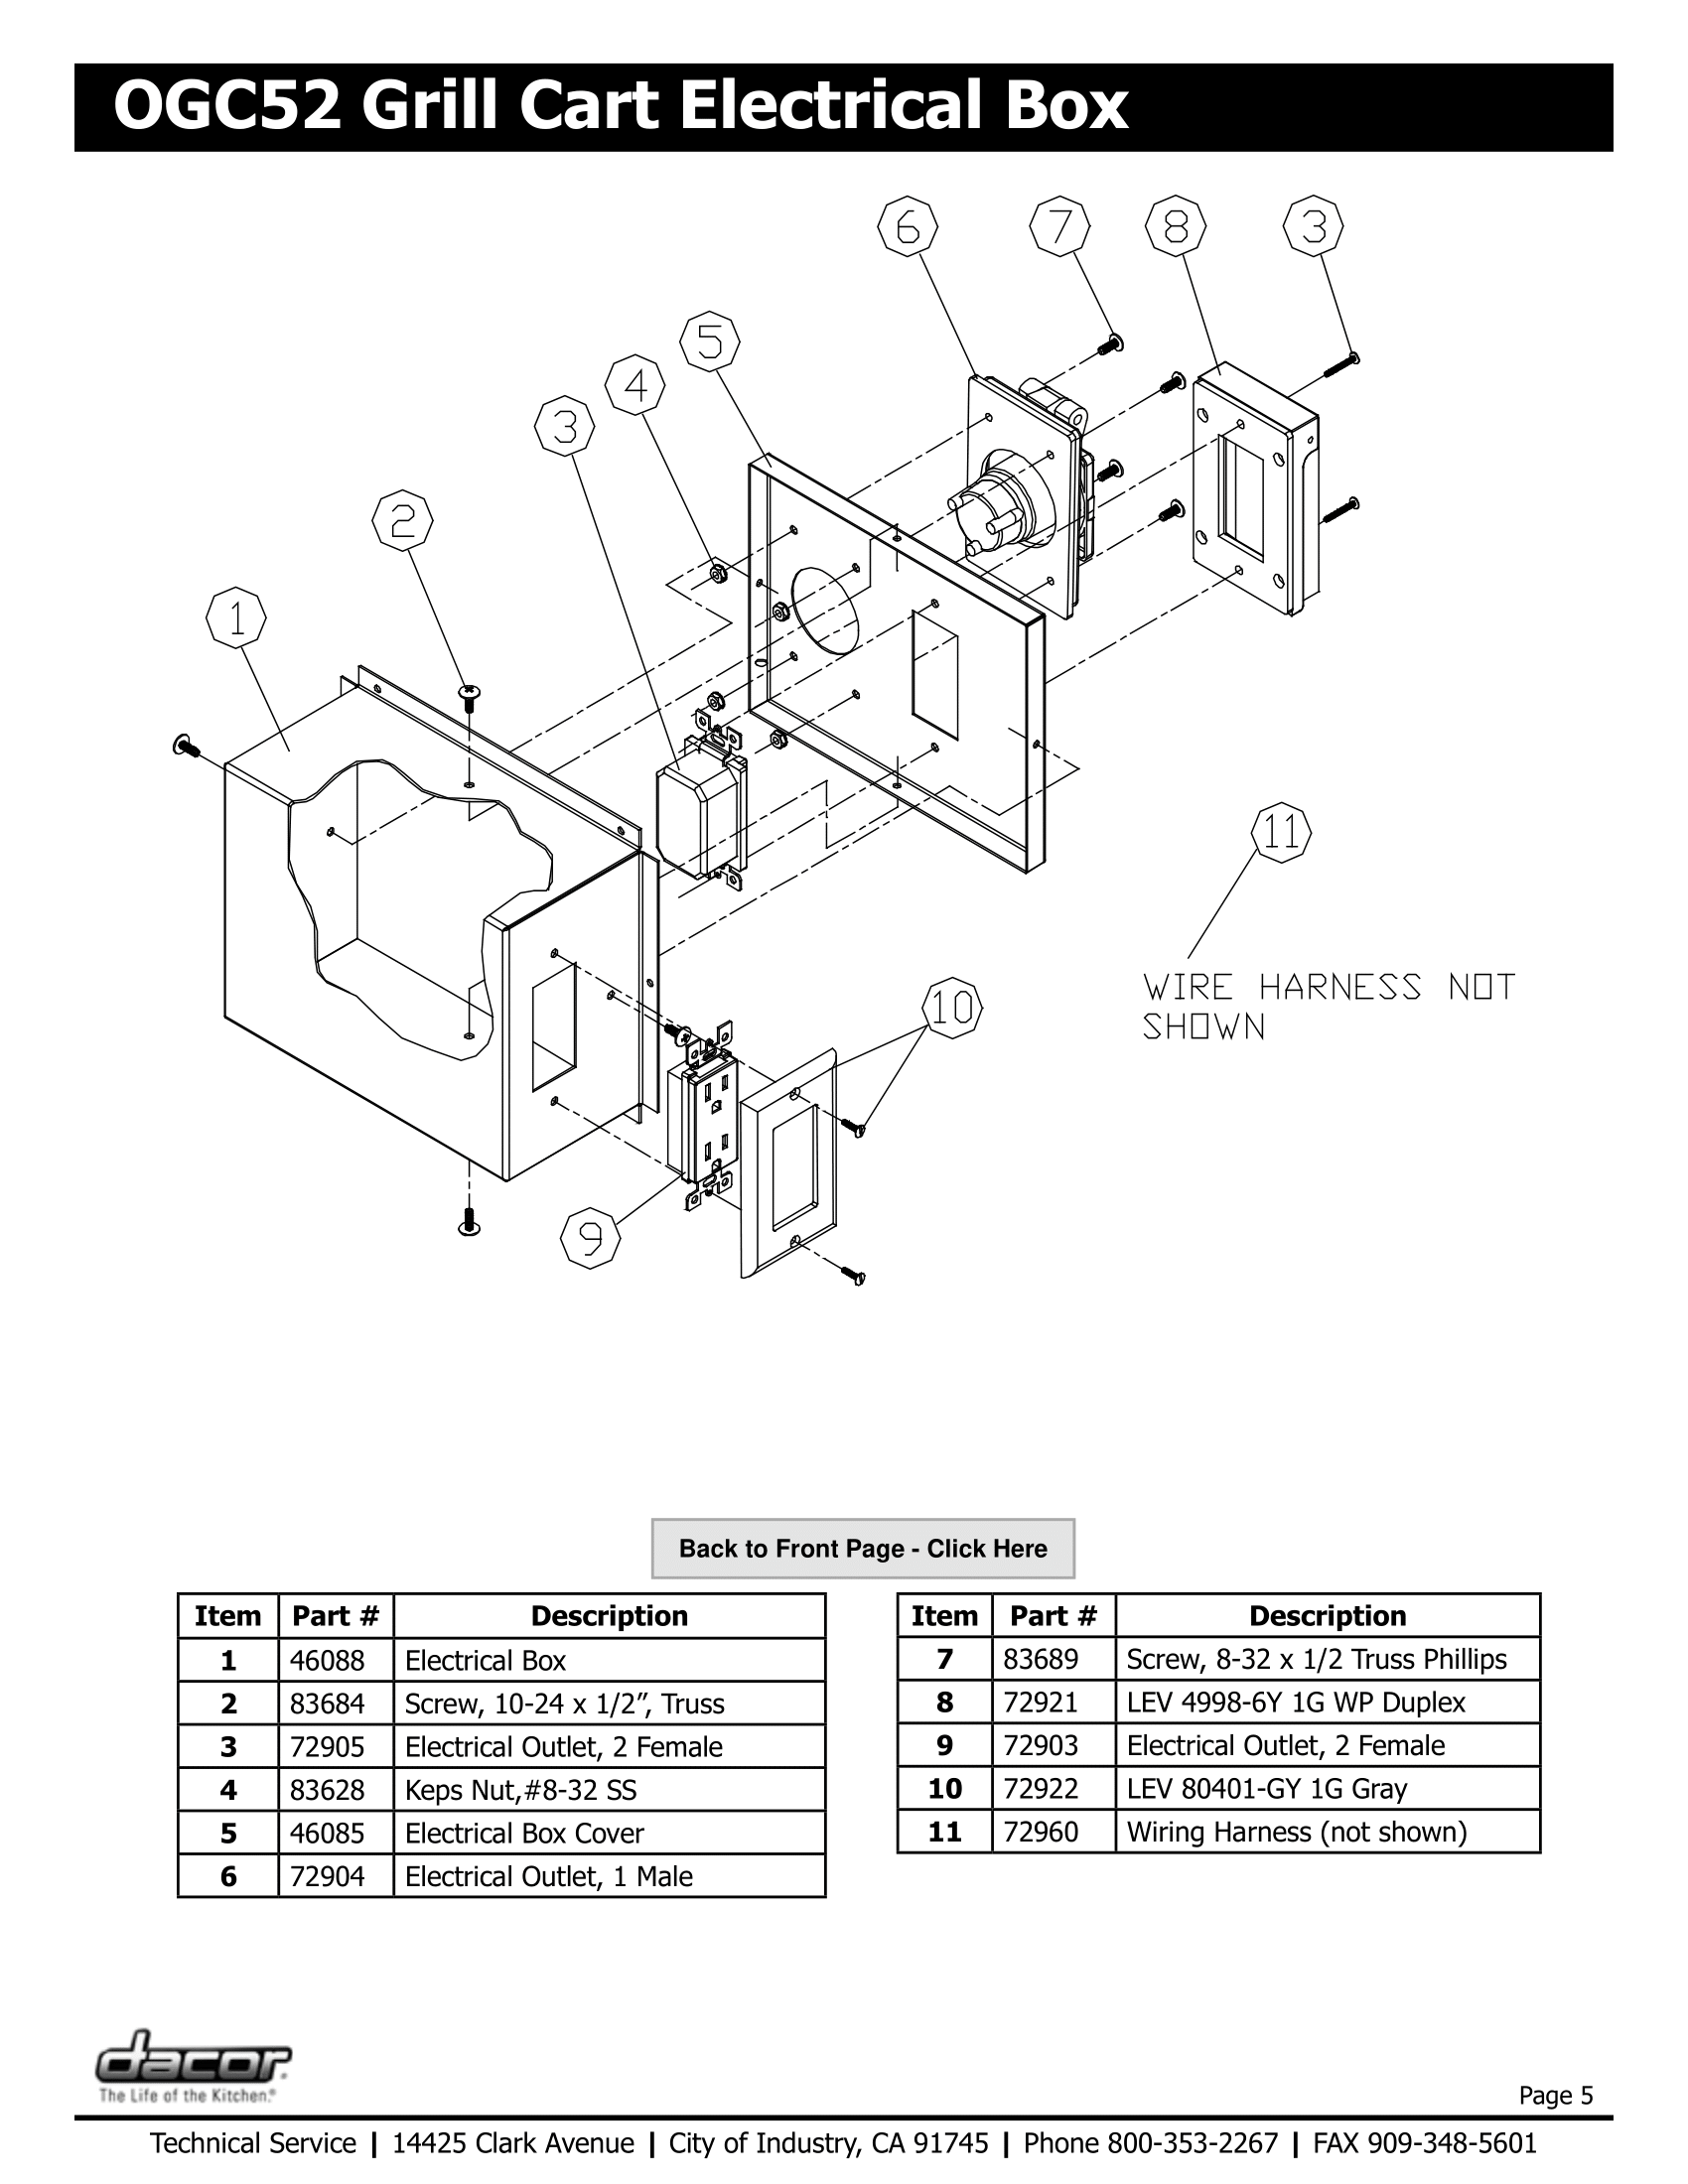 Dacor OGC52 Electrical Box Schematic